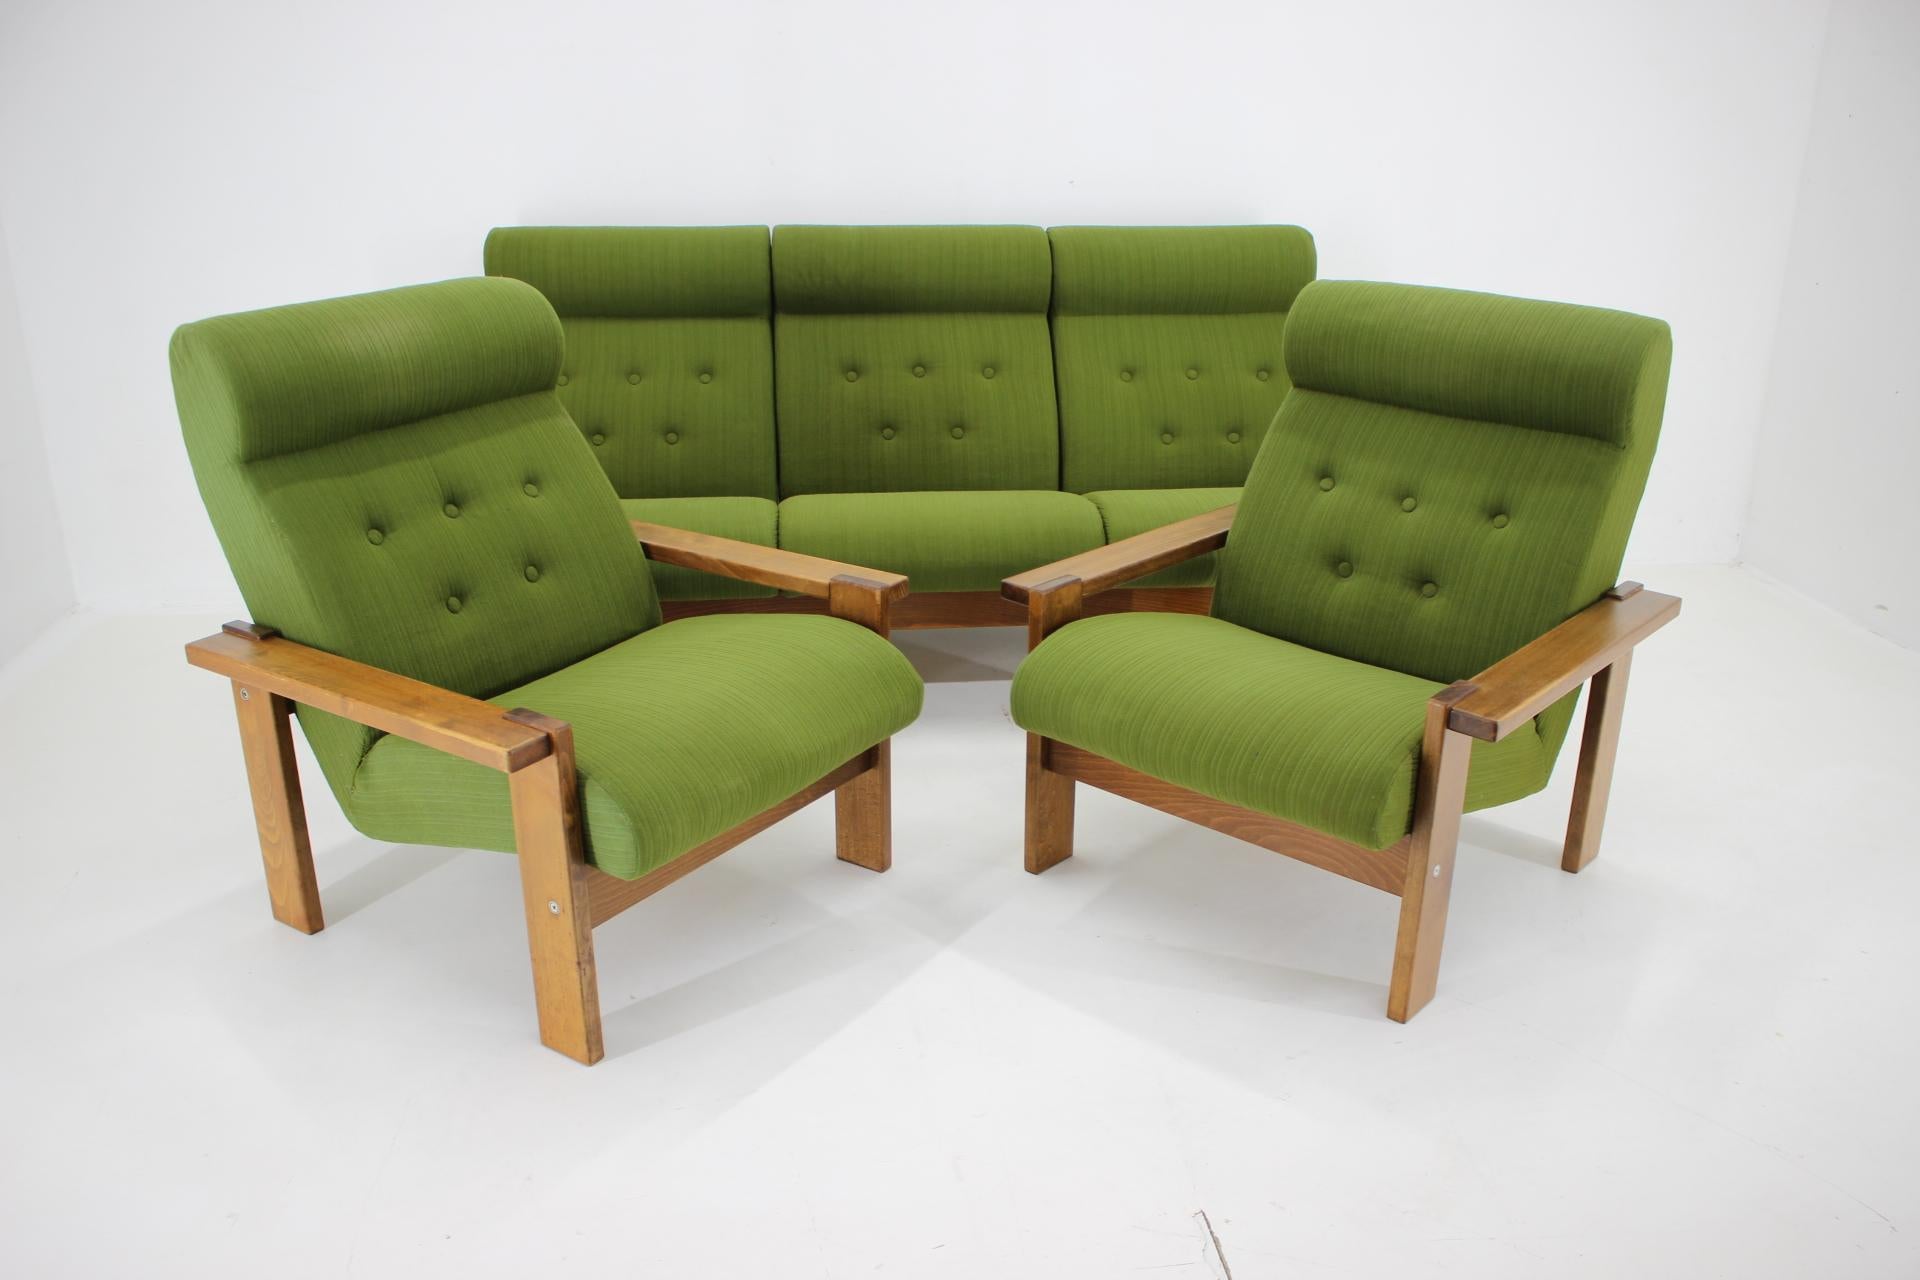 1970s living room furniture for sale